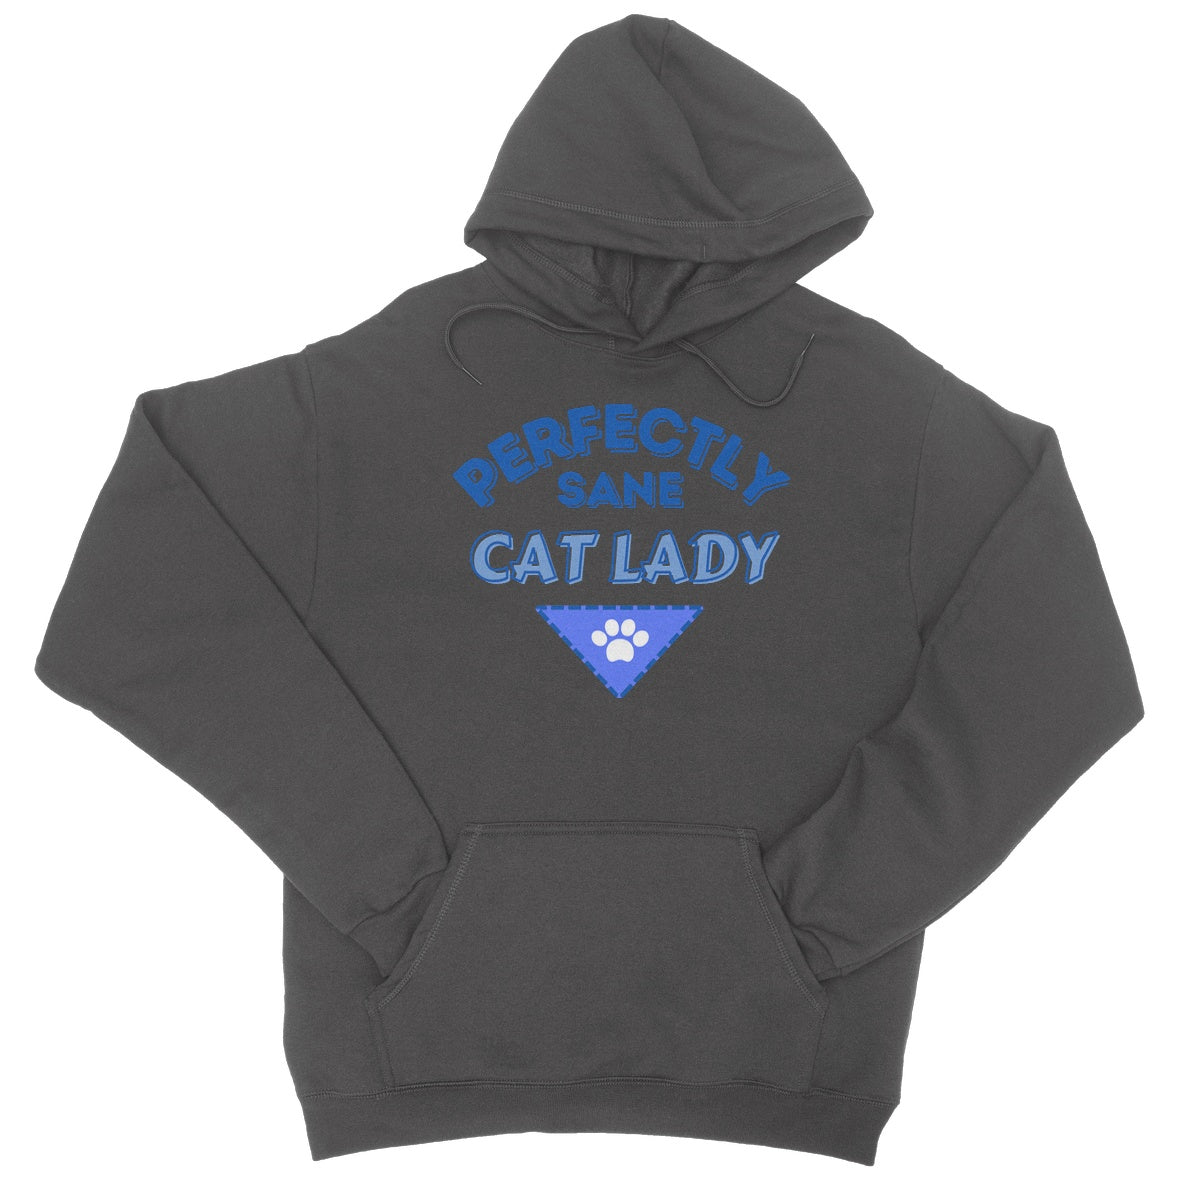 perfectly sane cat lady hoodie grey